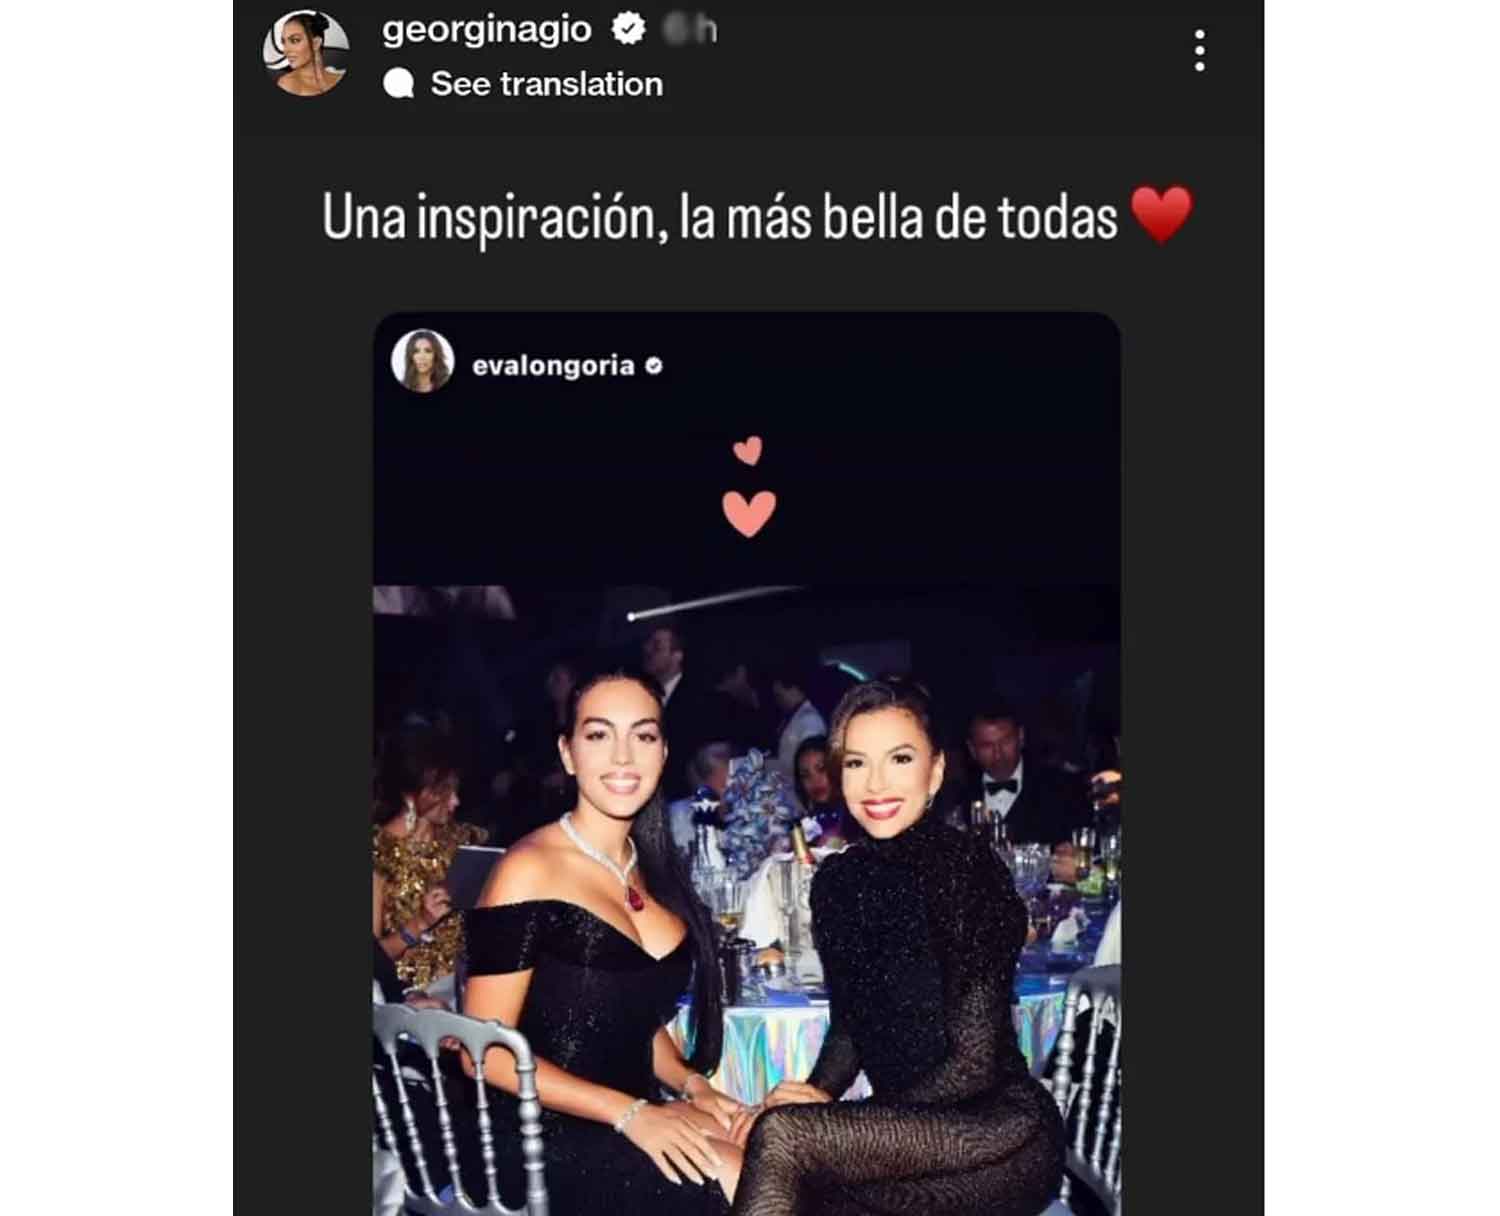 Cristiano Ronaldo’s girlfriend Georgina Rodriguez gushes over a Hollywood star